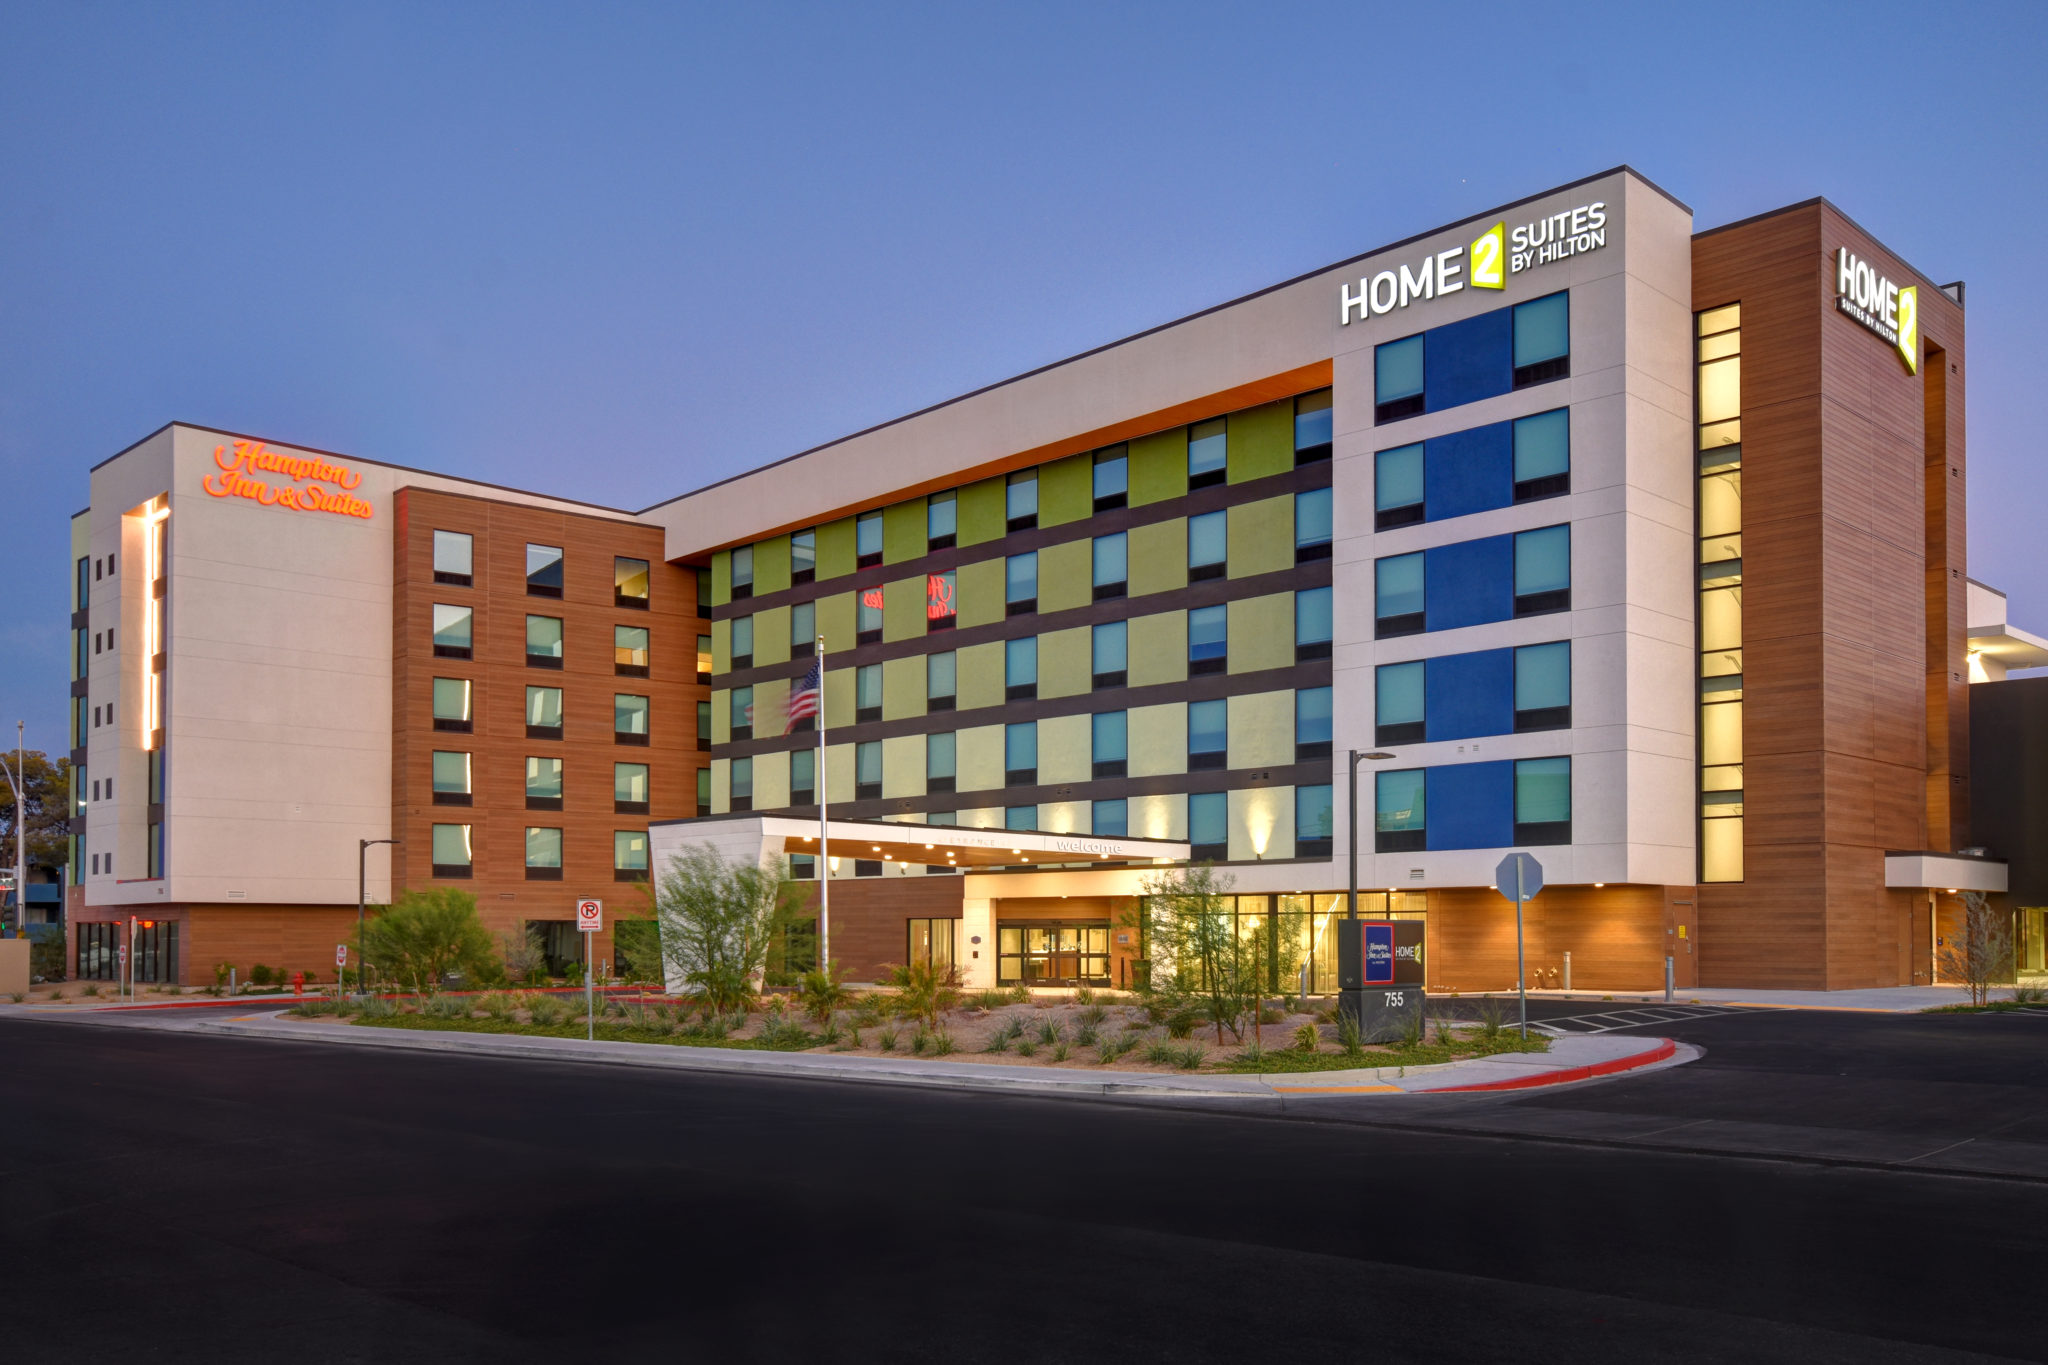 Las Vegas Hampton/Hilton Property Secures Refinancing Hall Structured